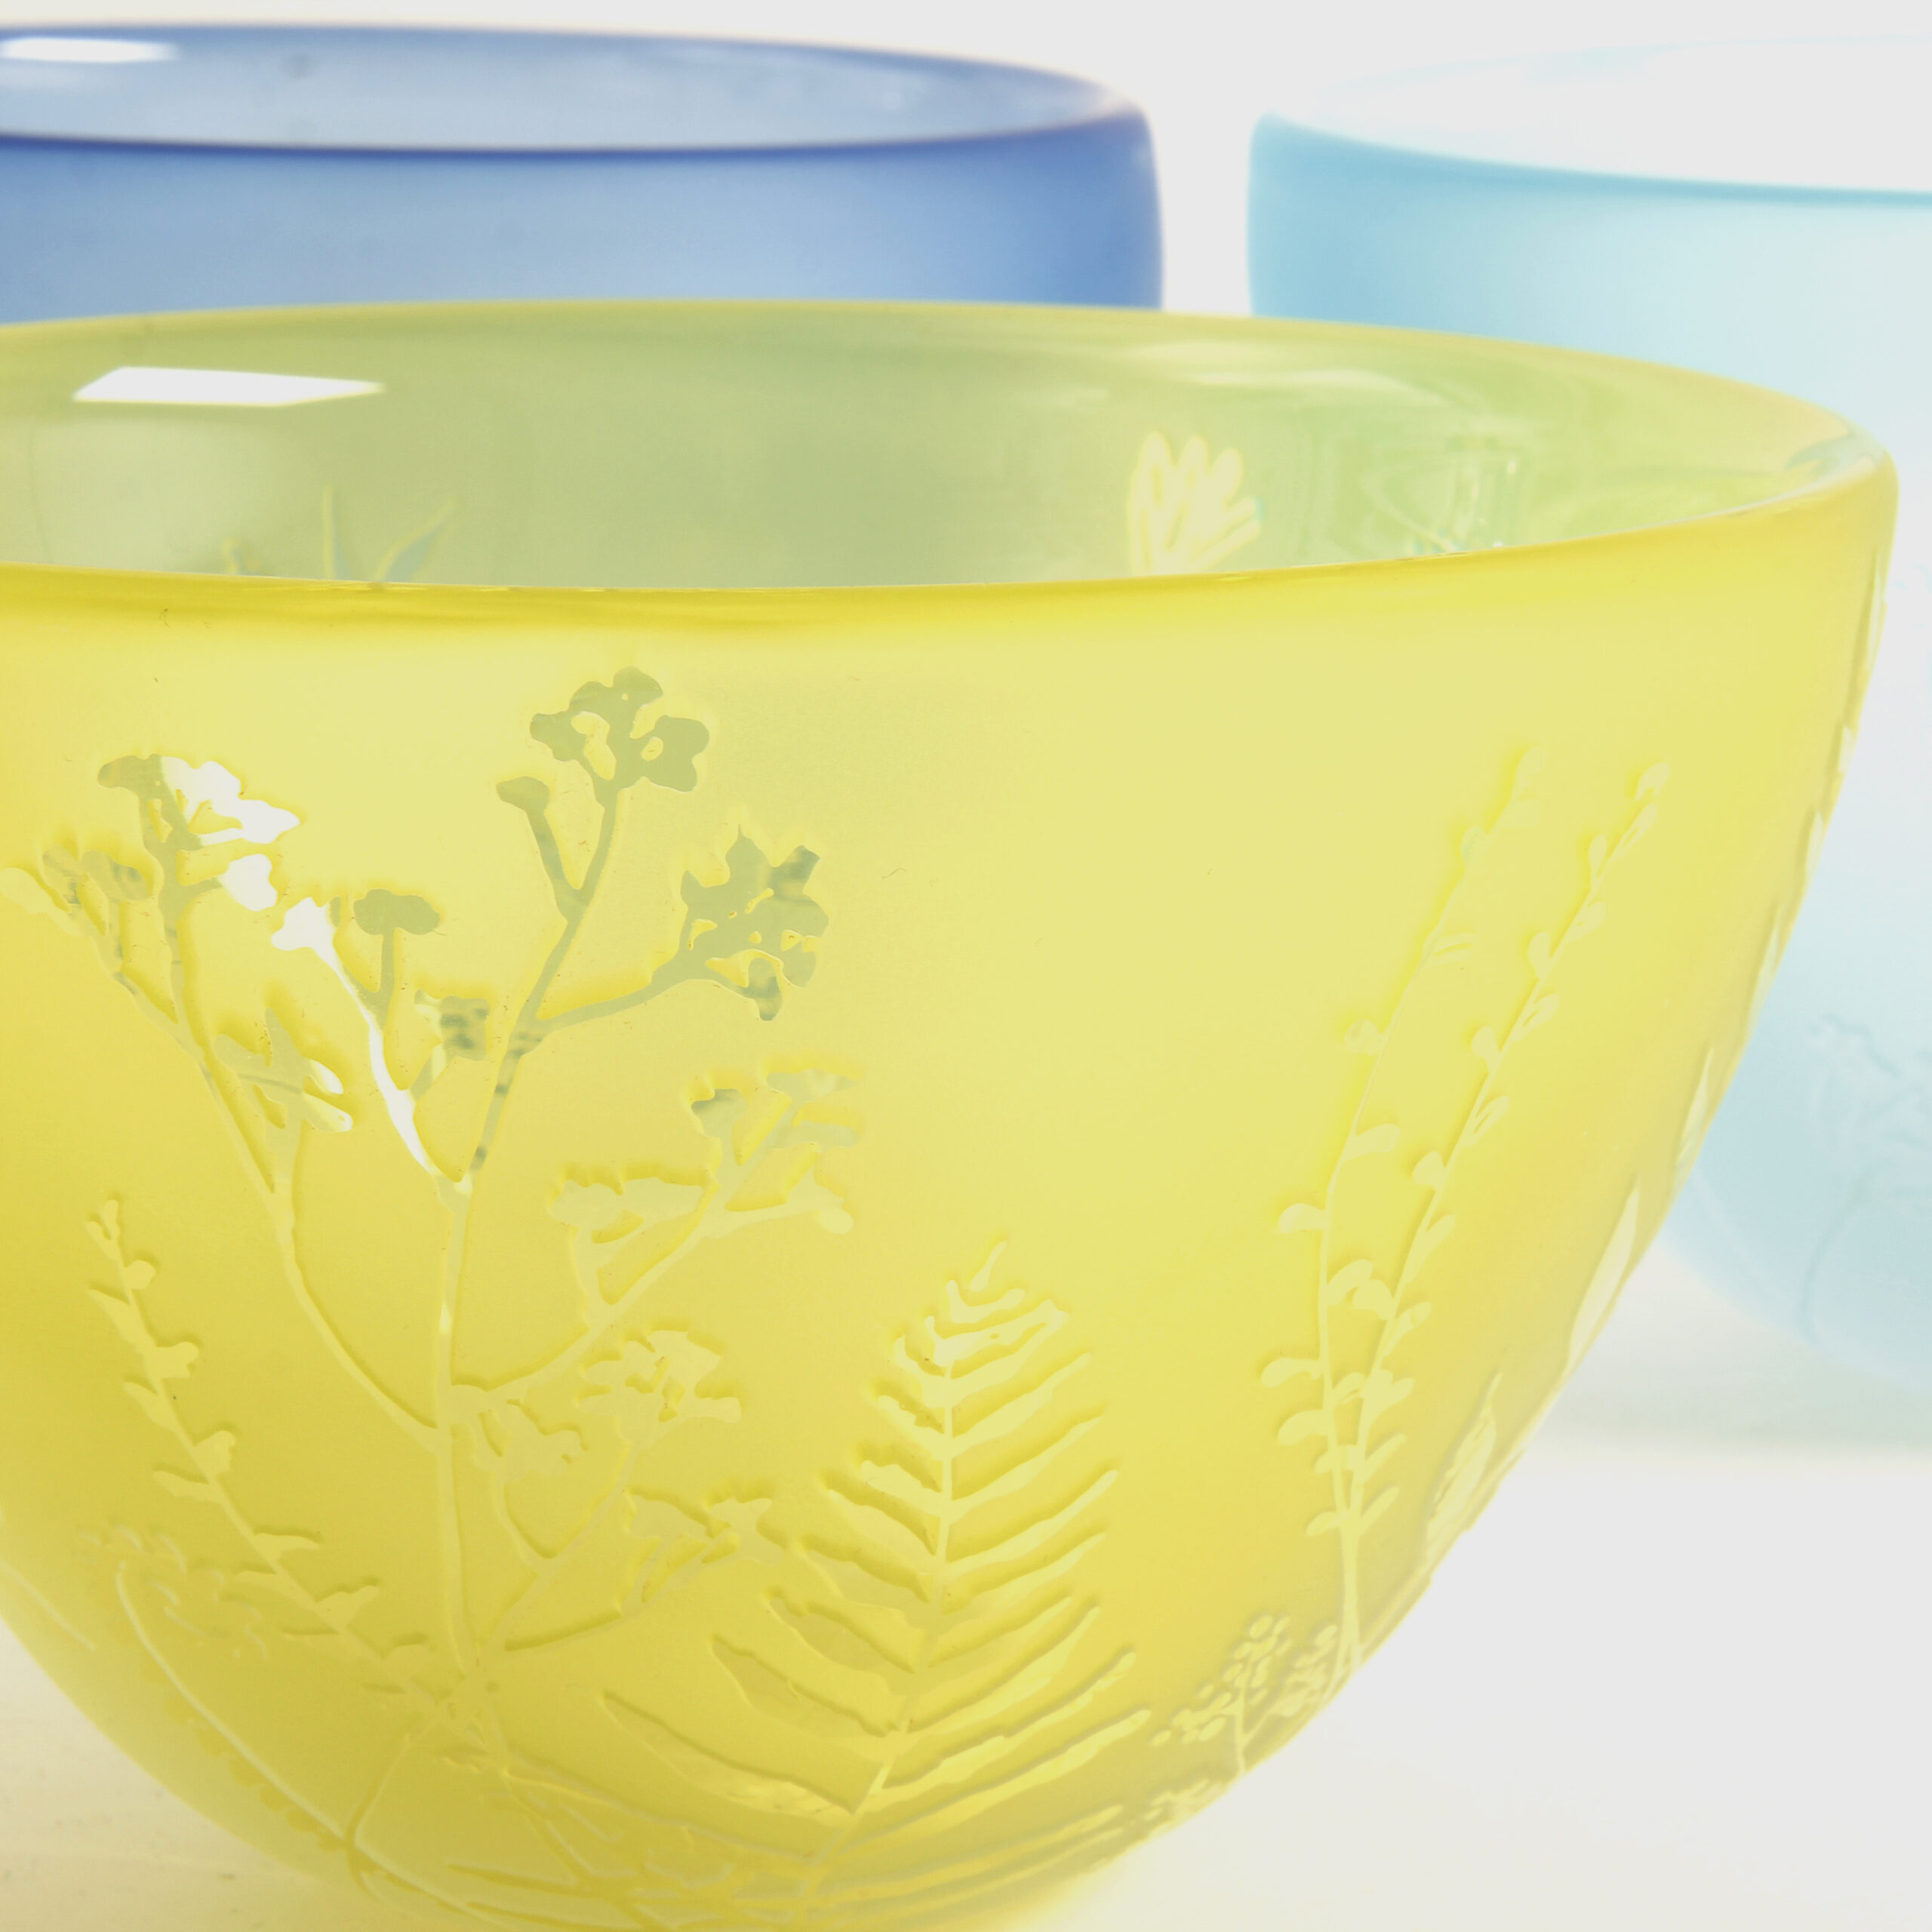 Carol Nesbitt: Yellow Bowl with Wildflowers Product Image 3 of 4